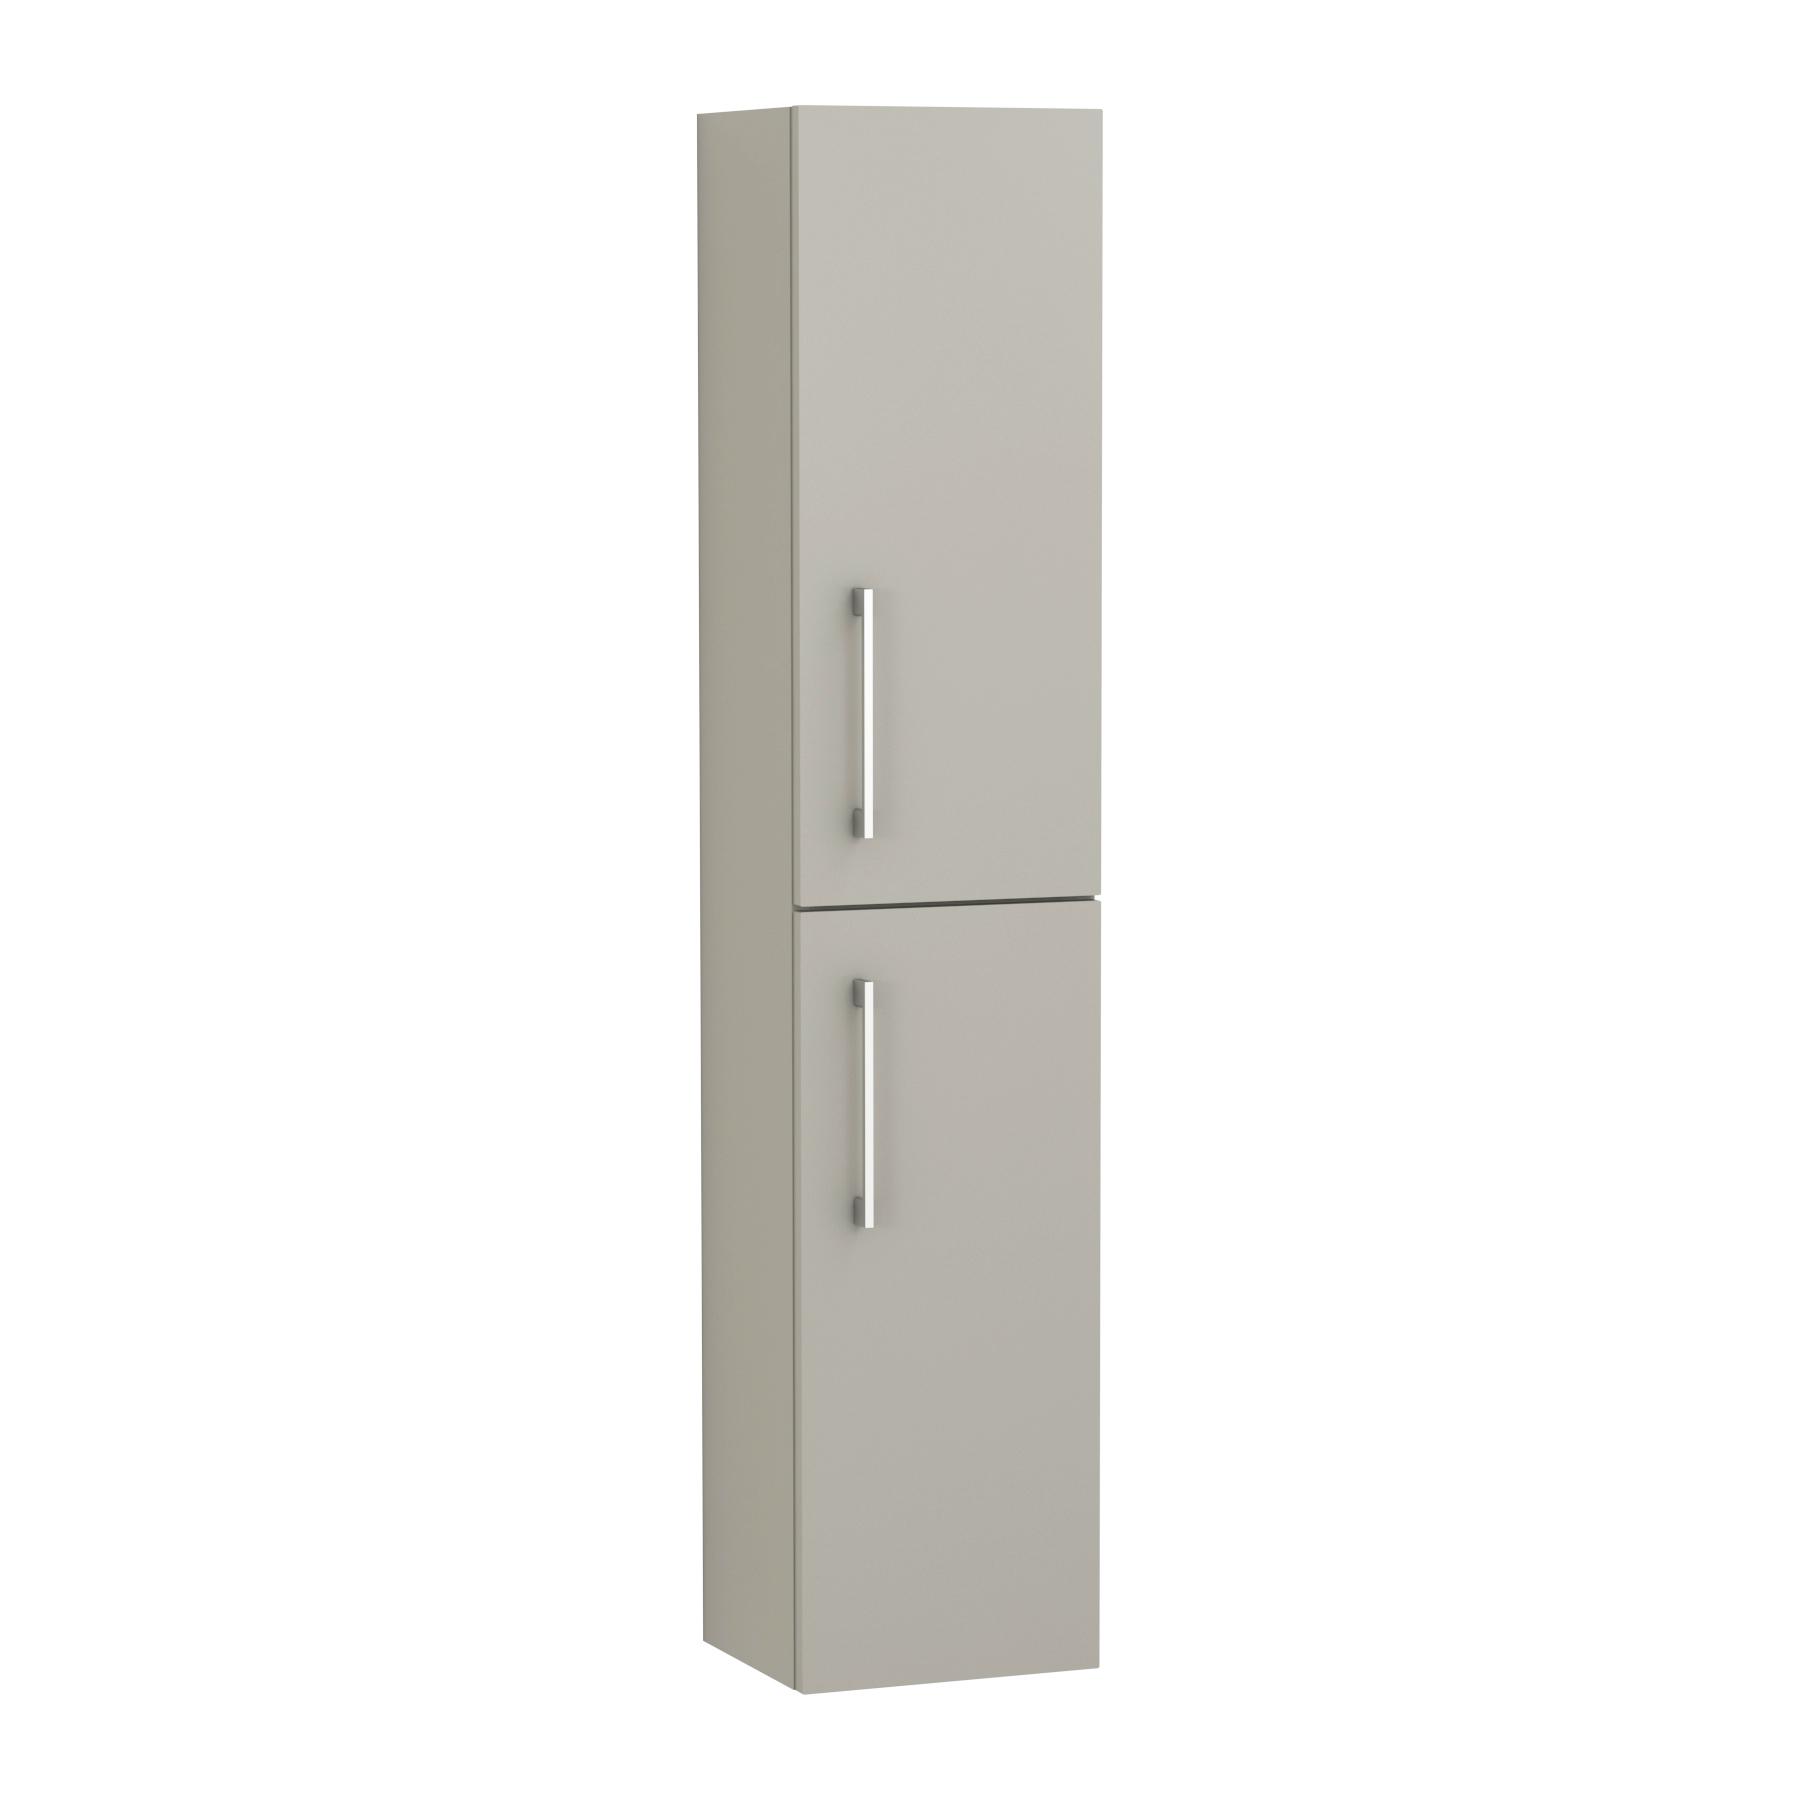 Modena 300mm Satin Grey 2 Door Wall Hung Tall Boy Bathroom Cabinet Storage Unit